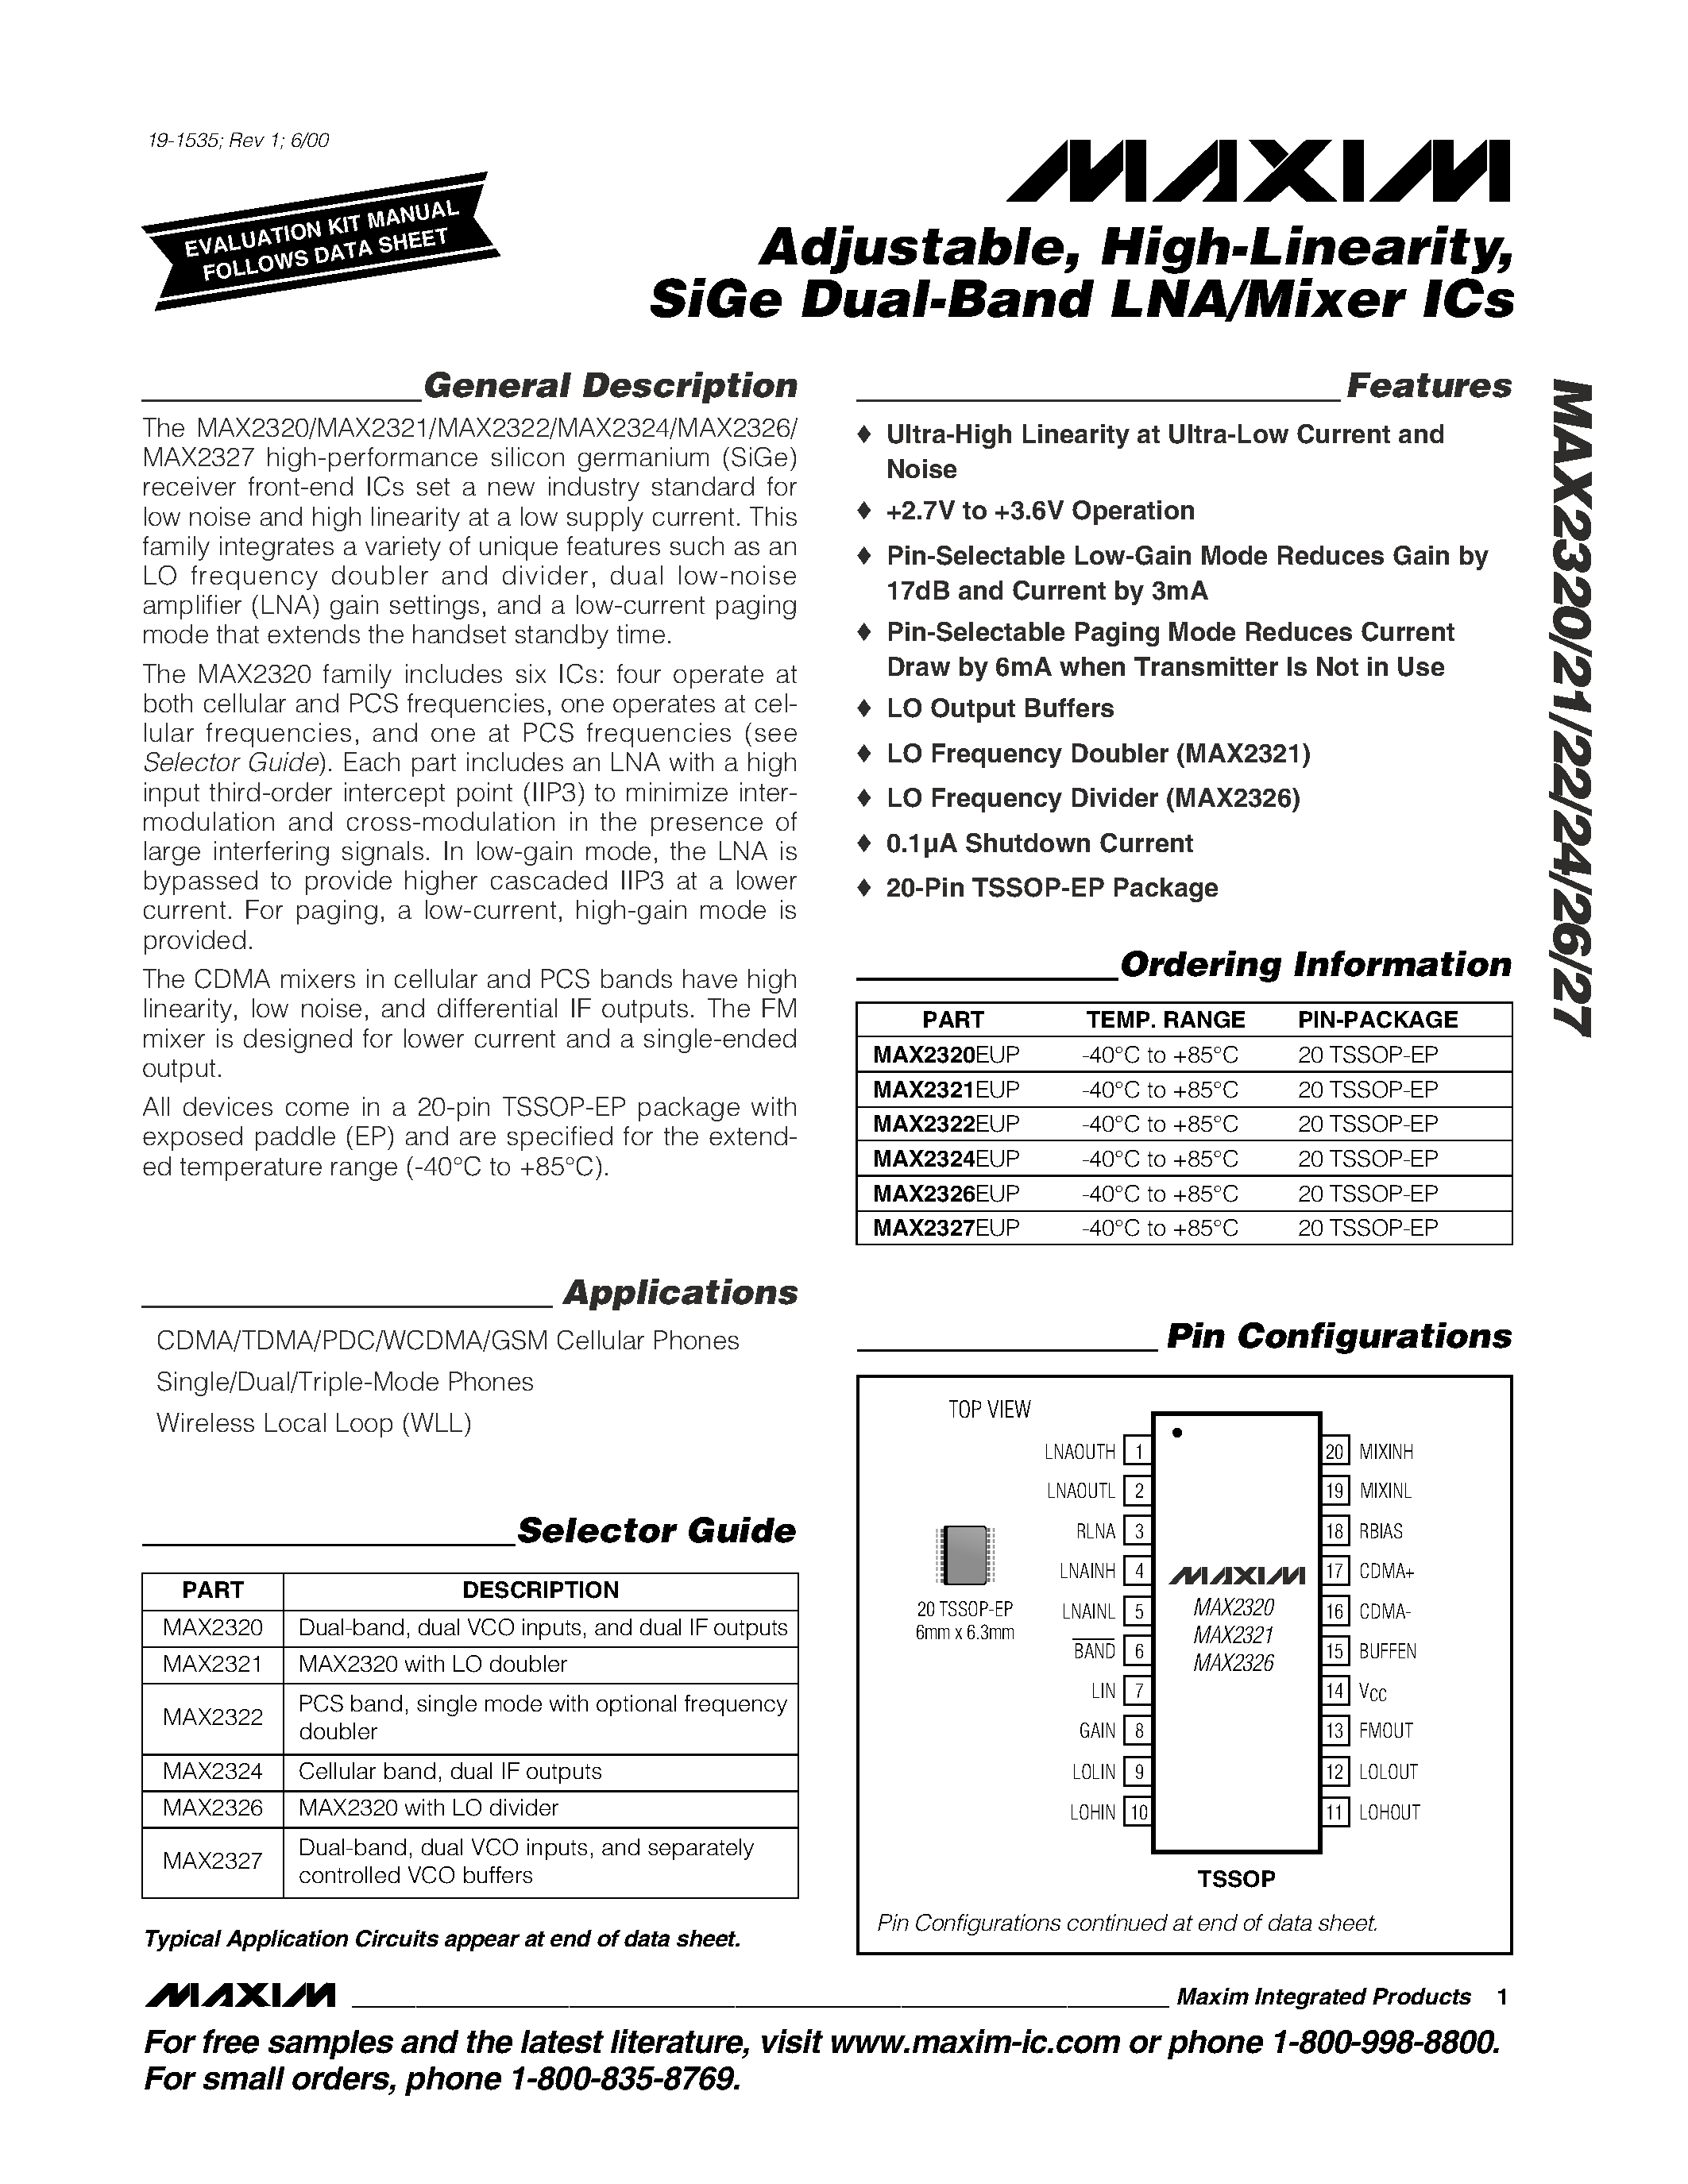 Datasheet MAX2327 - Adjustable / High-Linearity / SiGe Dual-Band LNA/Mixer ICs page 1